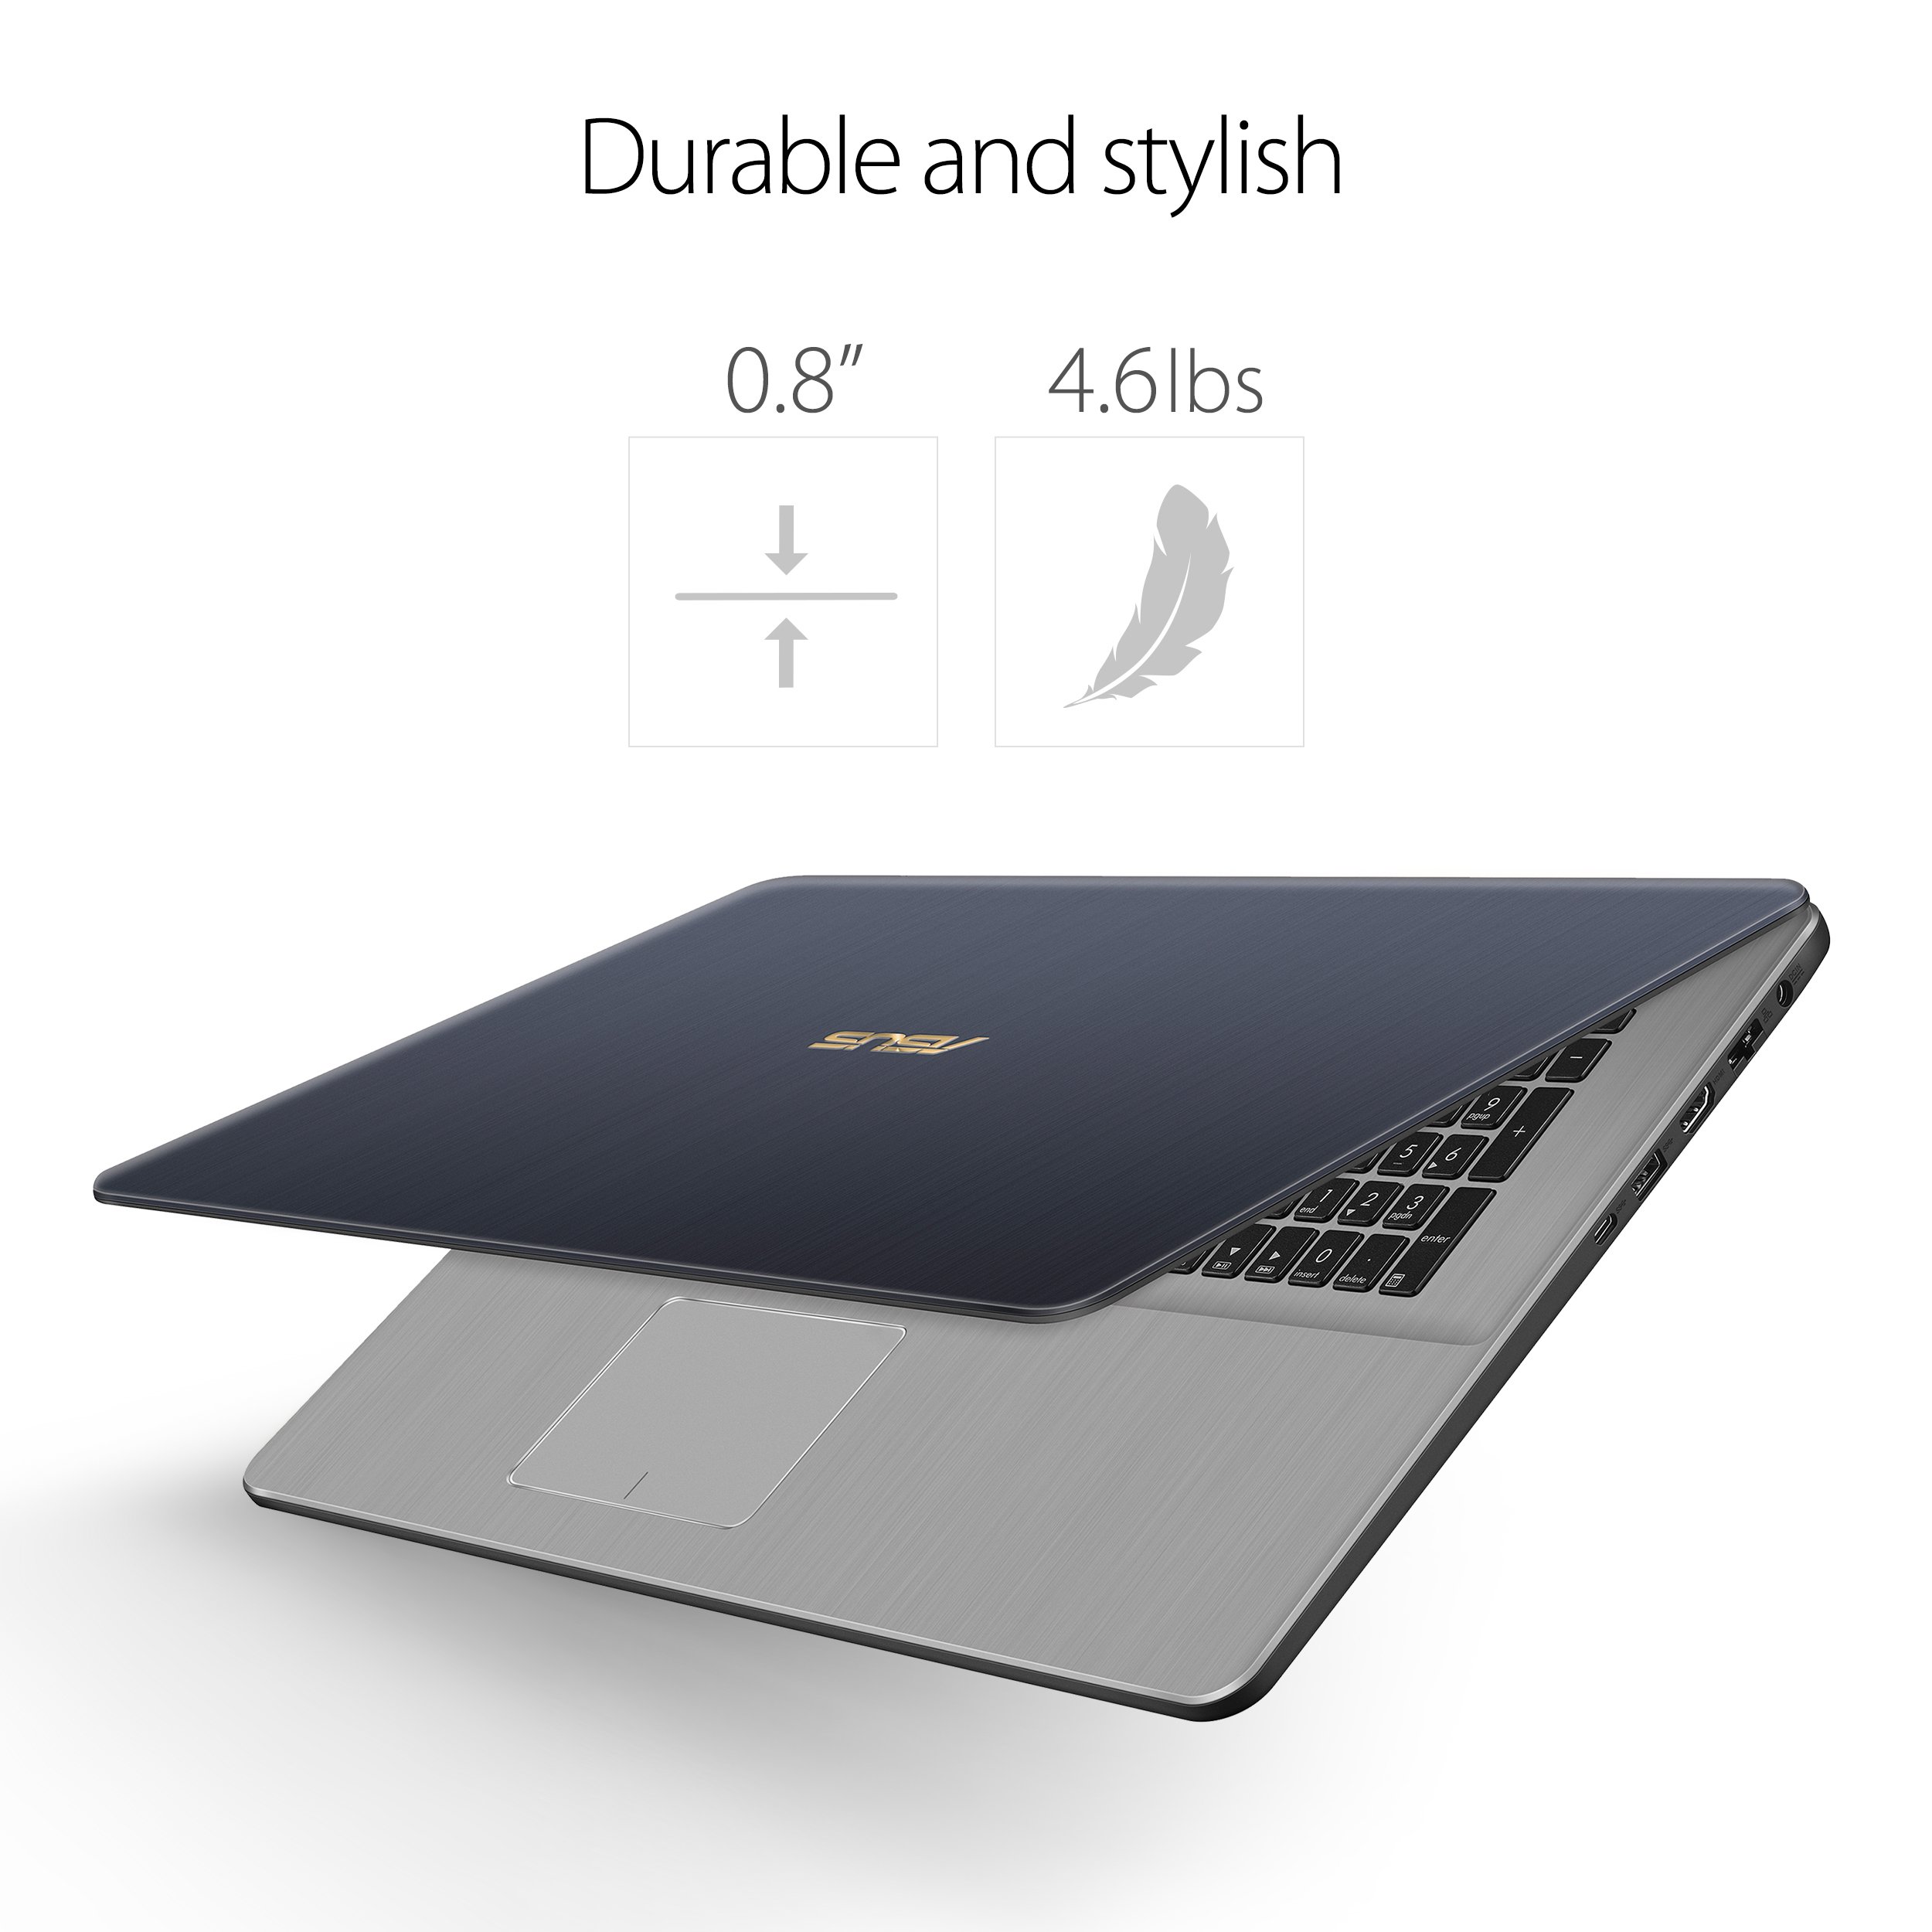 ASUS VivoBook Pro Thin & Light Laptop, 17.3